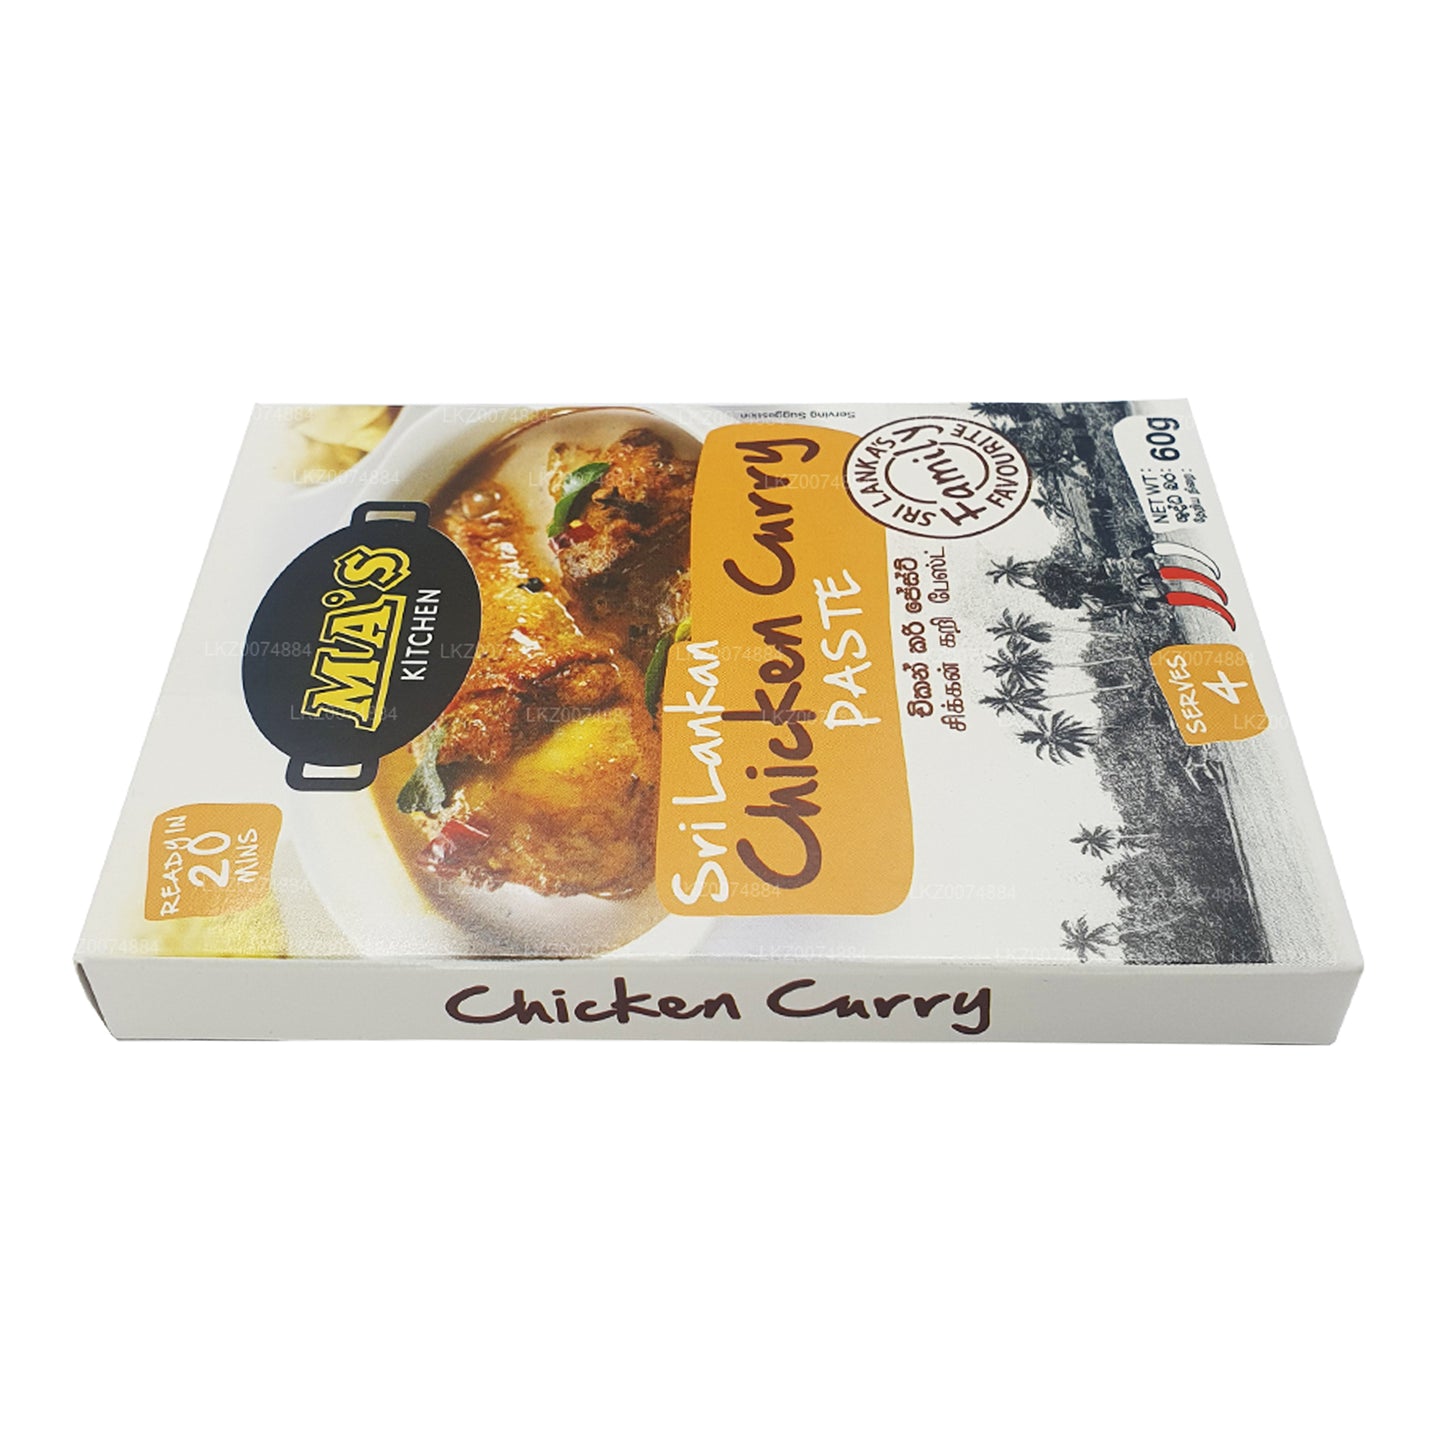 MA: s kök Sri Lankas Chicken Curry Paste (50g)